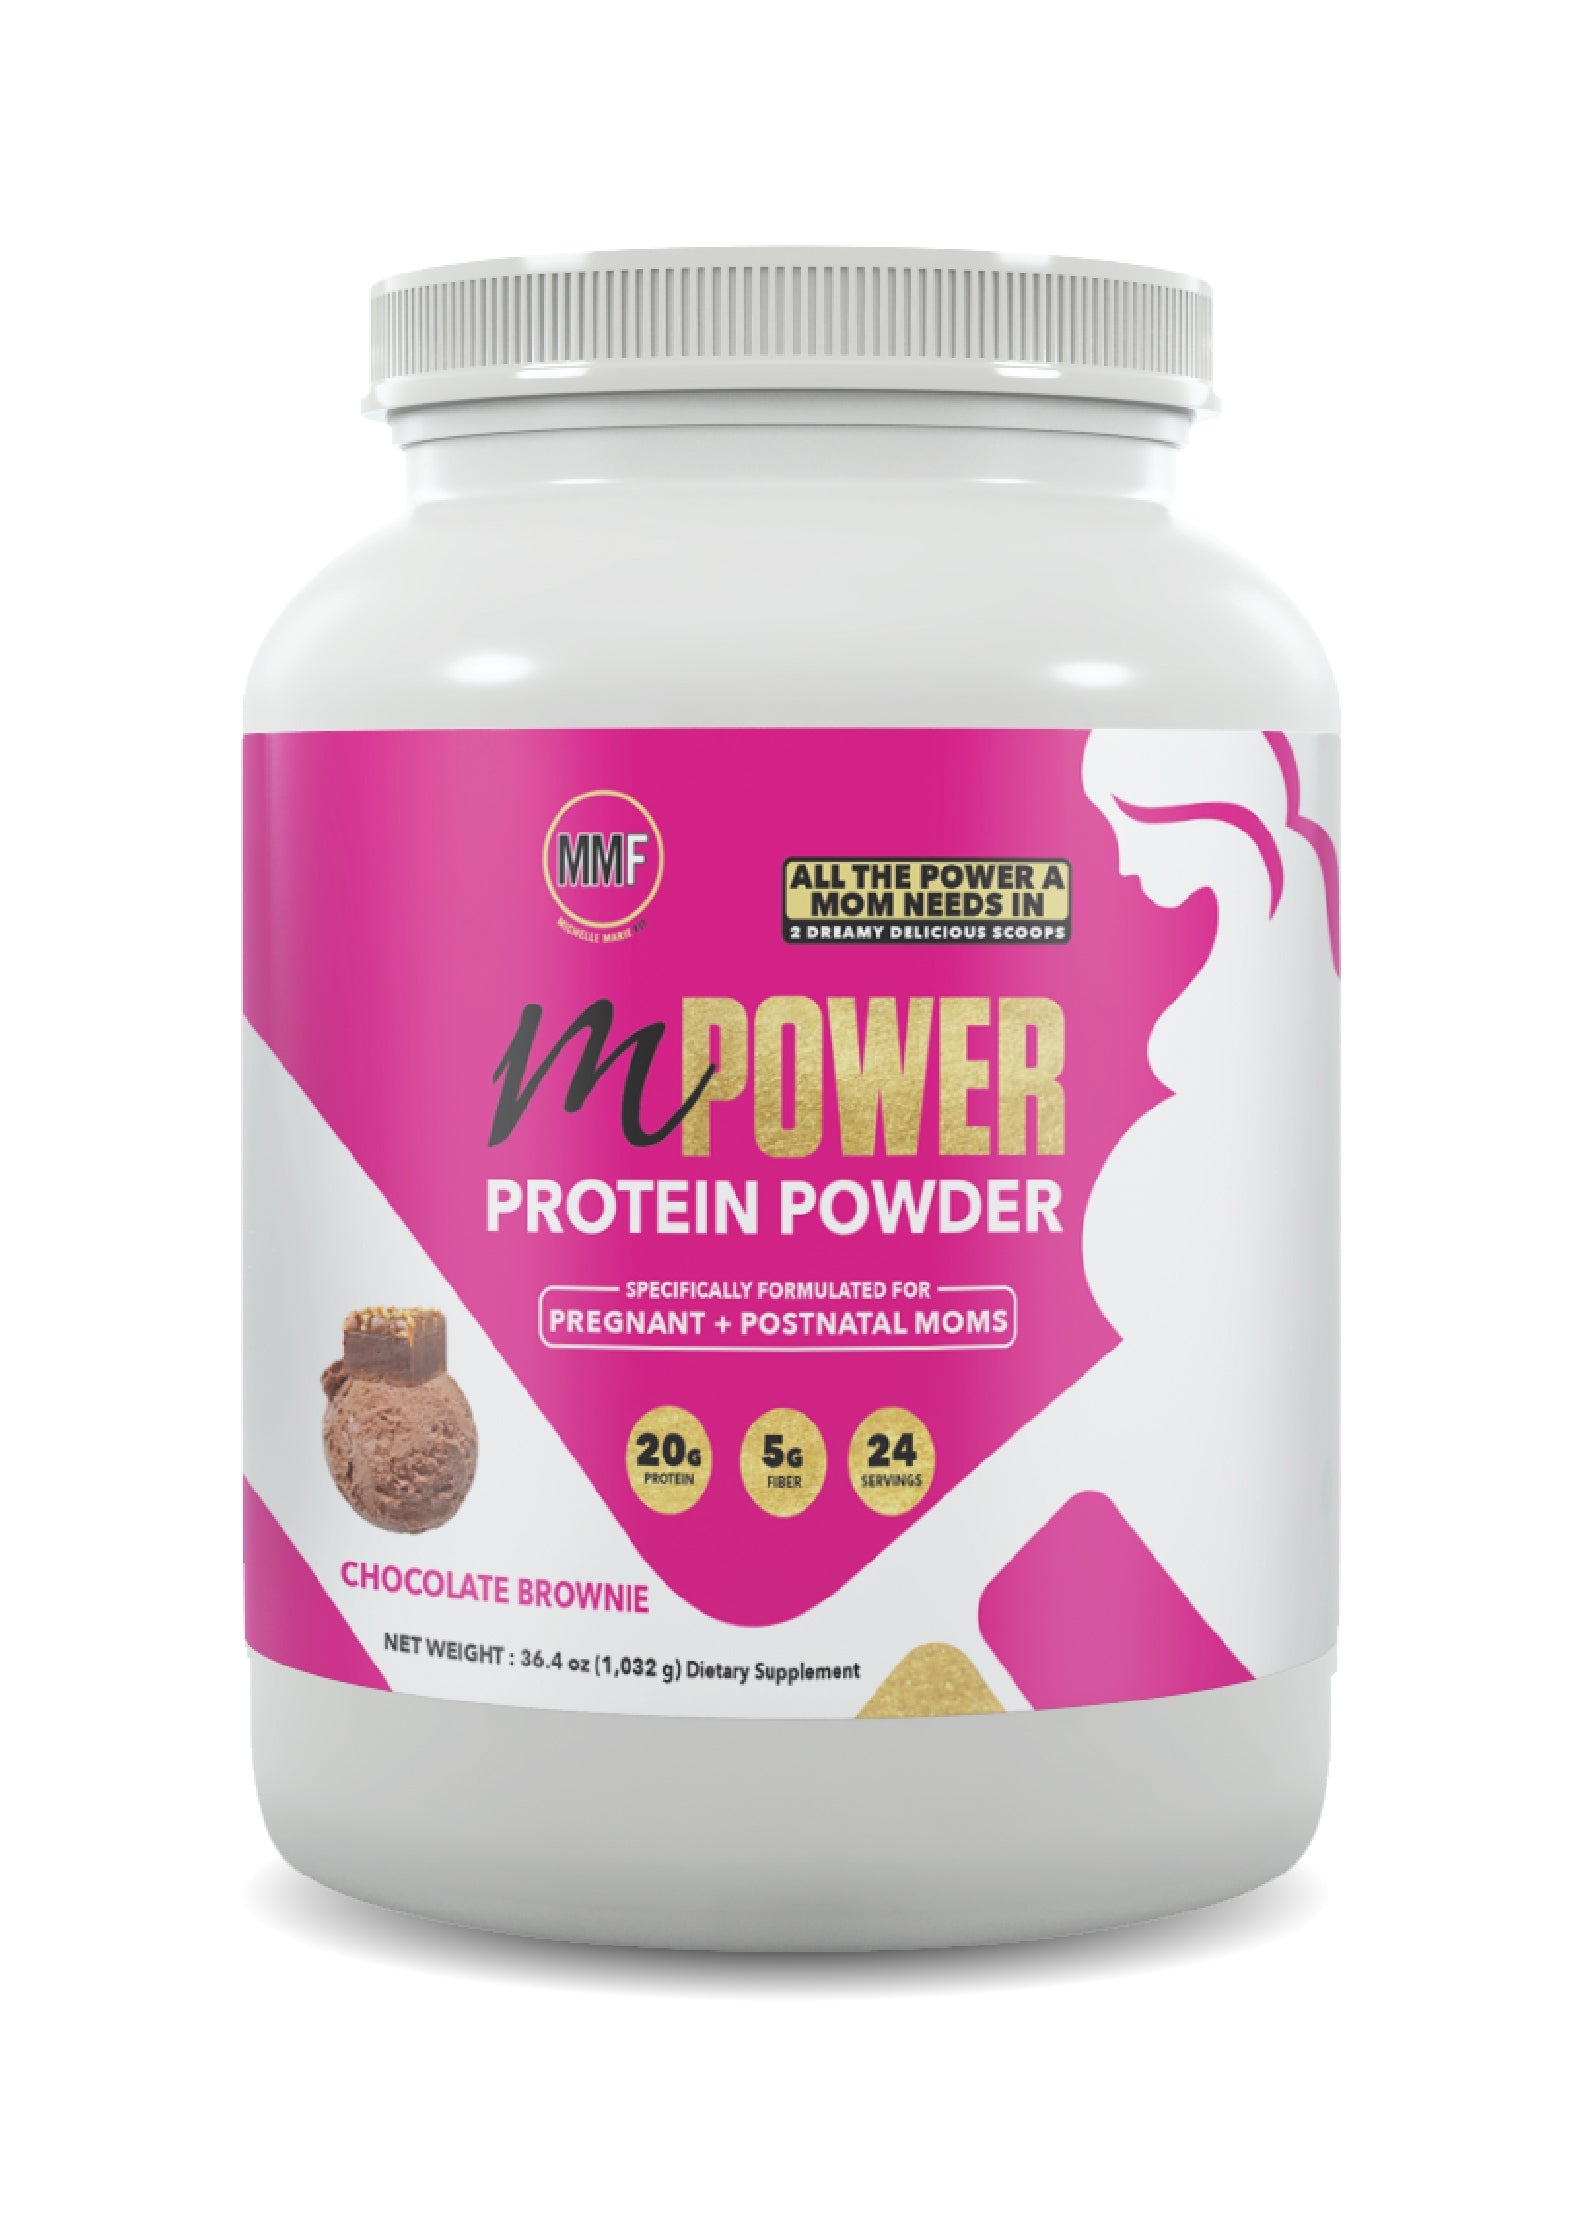 The best protein powder for pregnancy